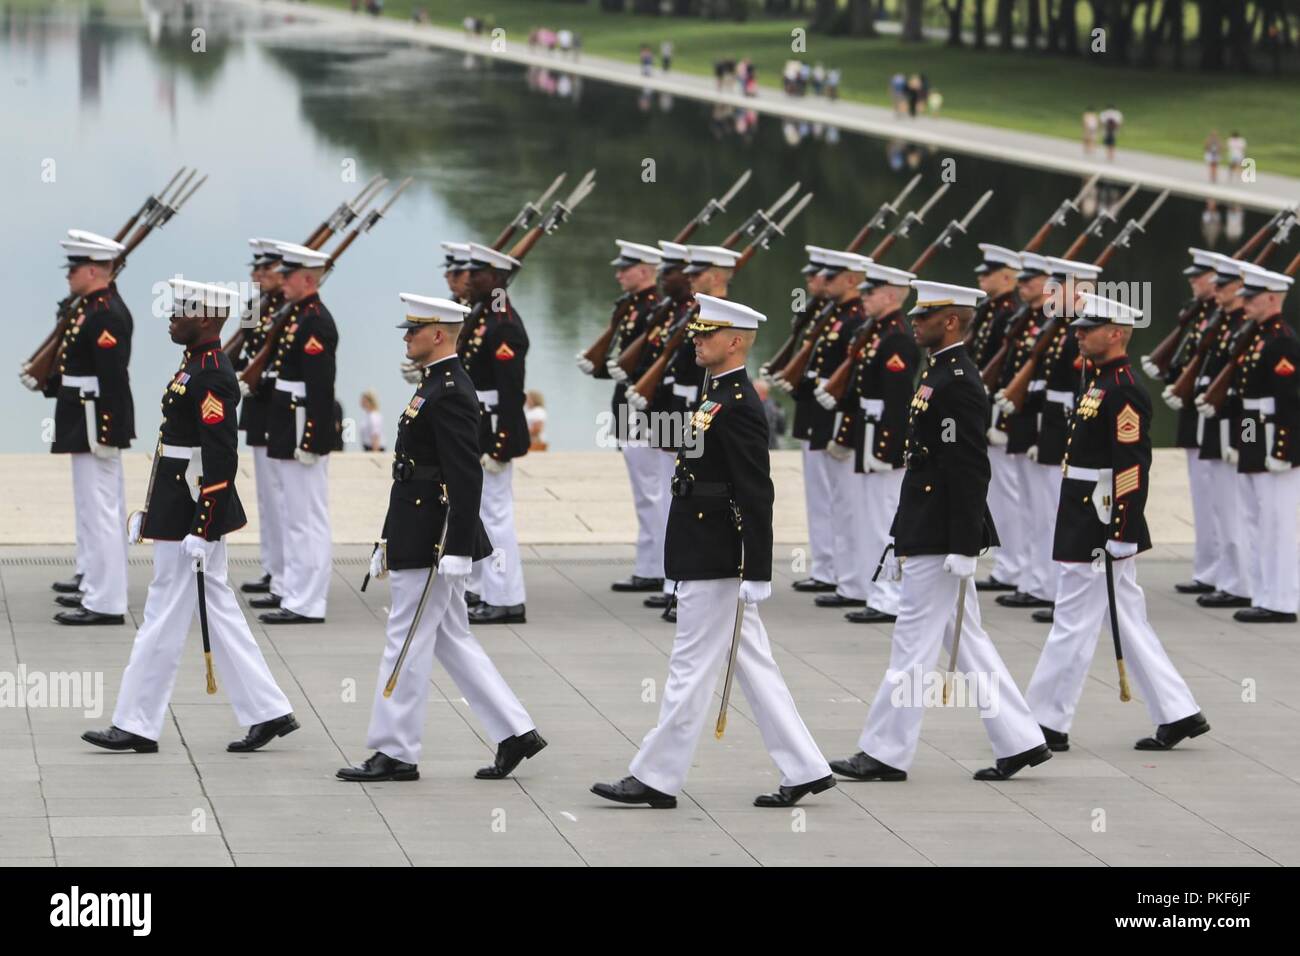 Marines with the Marine Barracks Washington D.C. parade marching staff